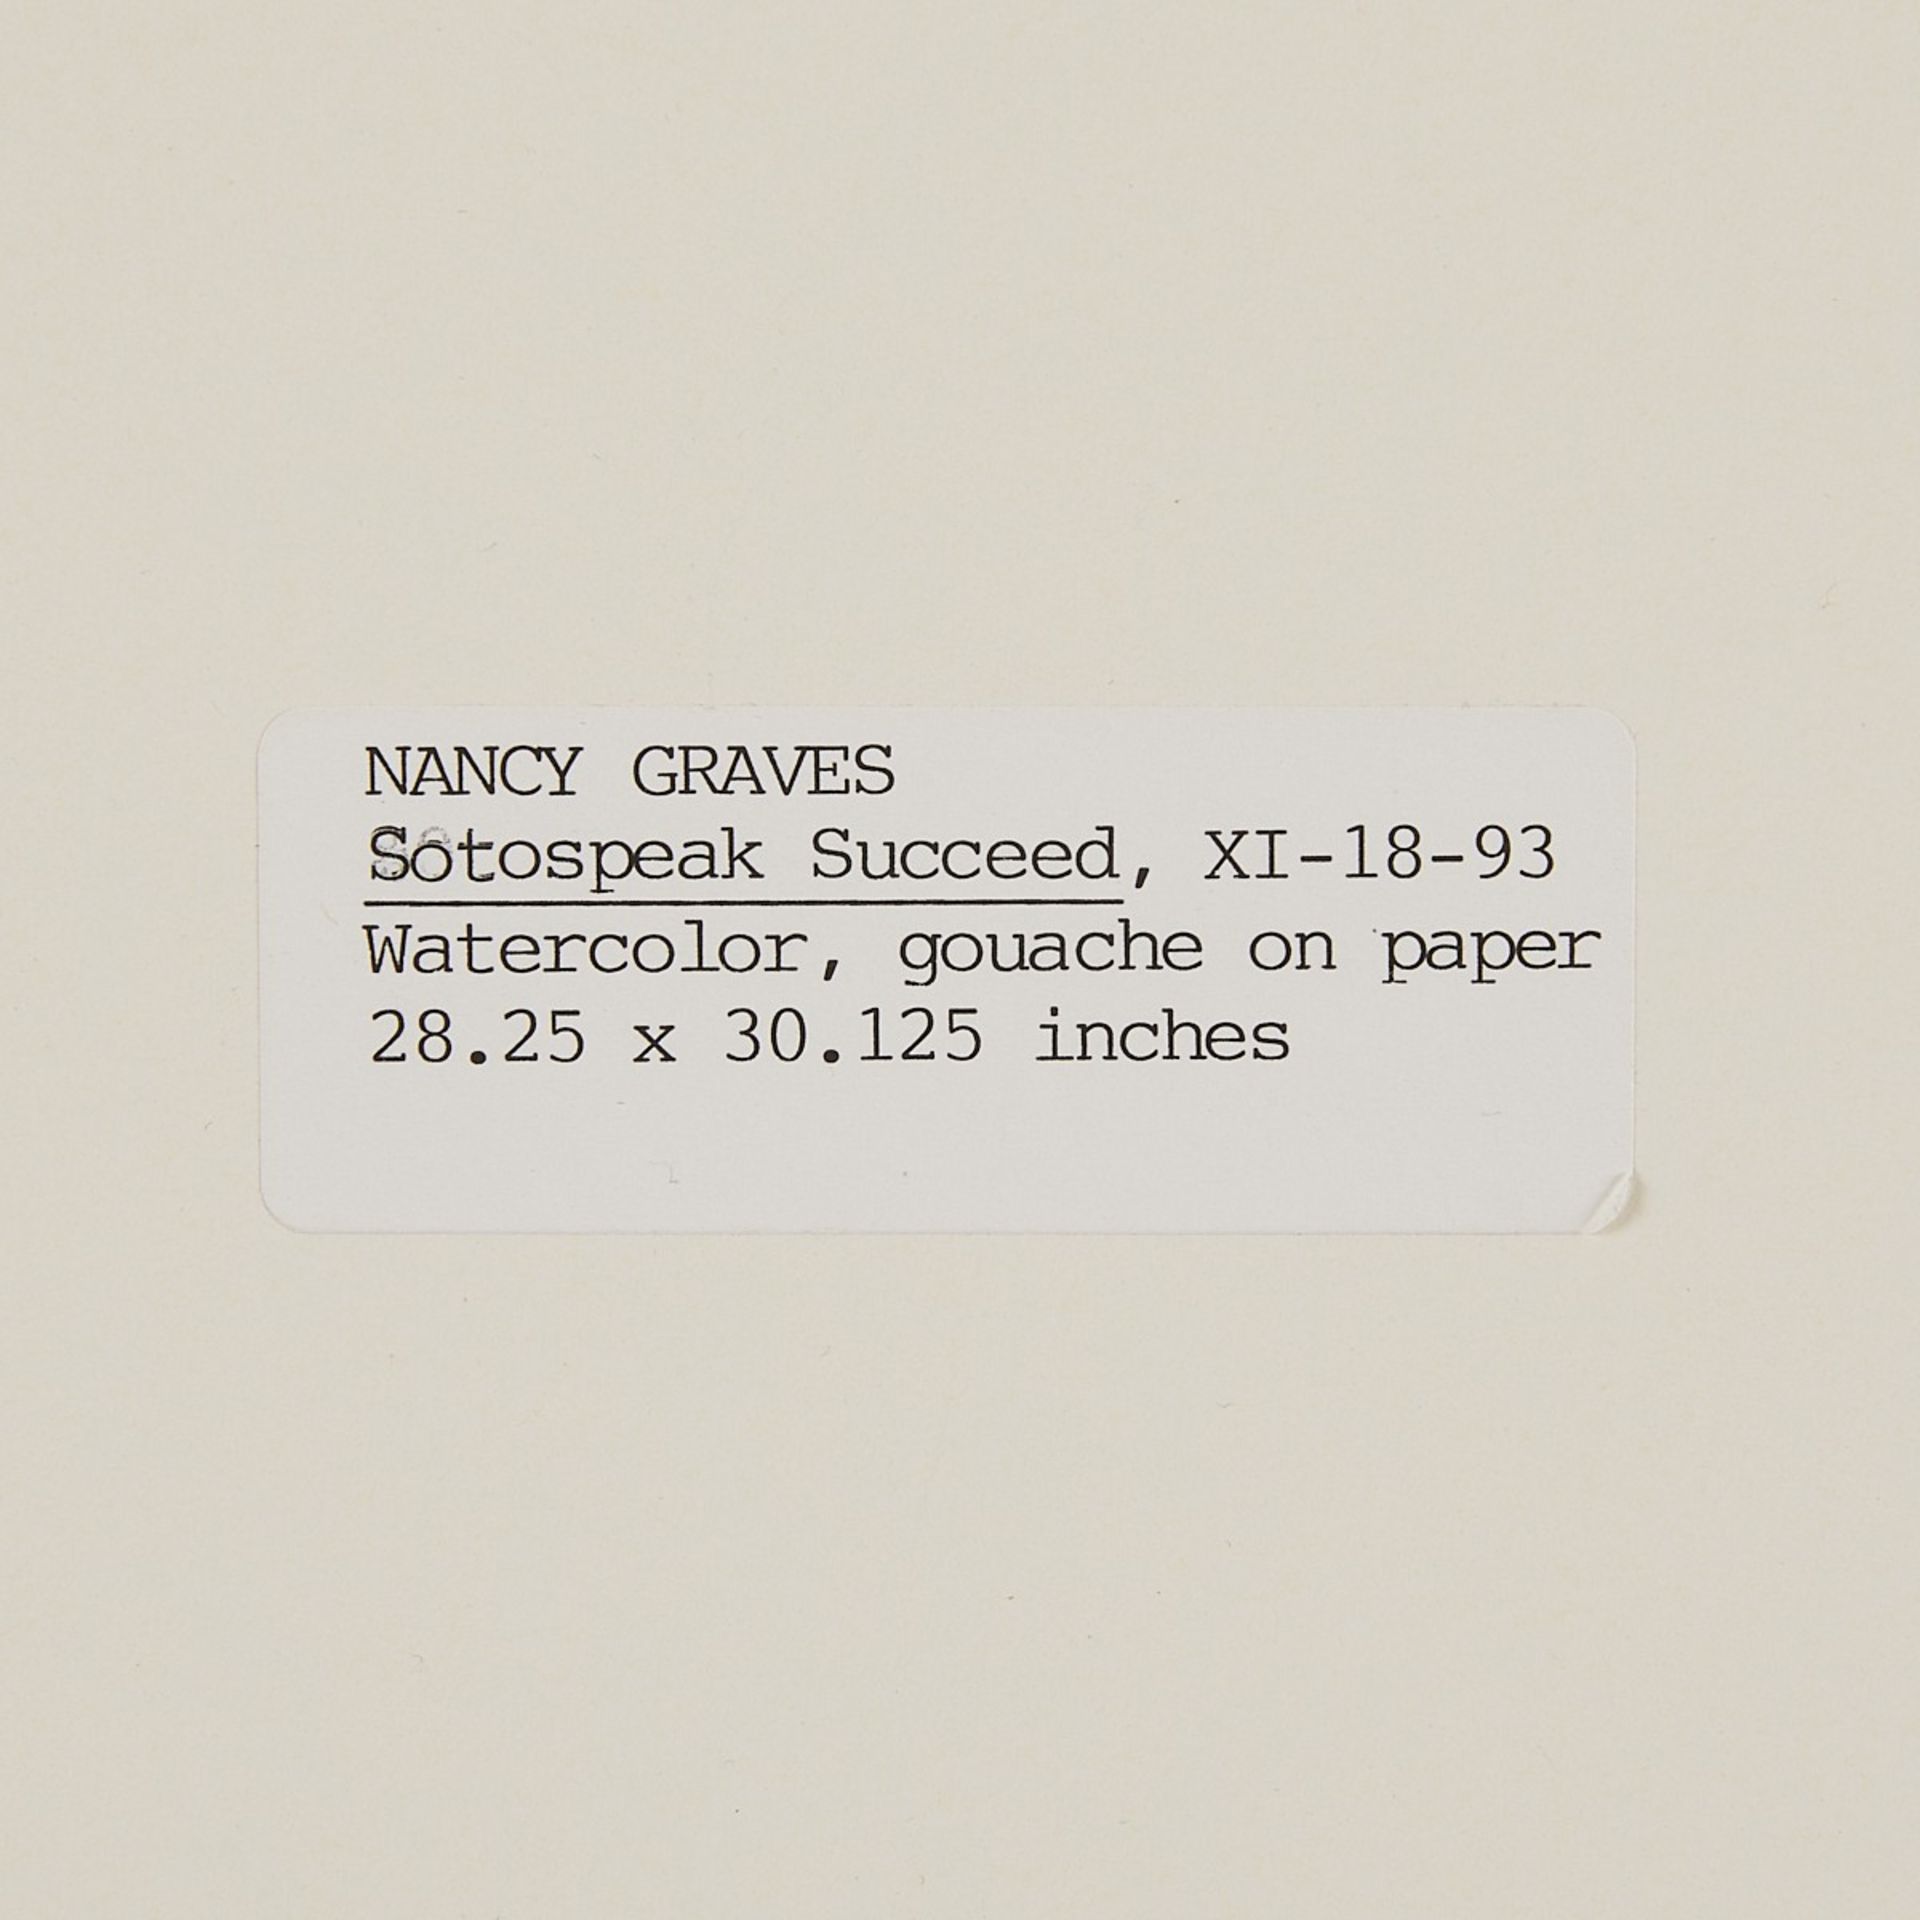 Nancy Graves "Sotospeak Succeed" Mixed Media - Bild 7 aus 8